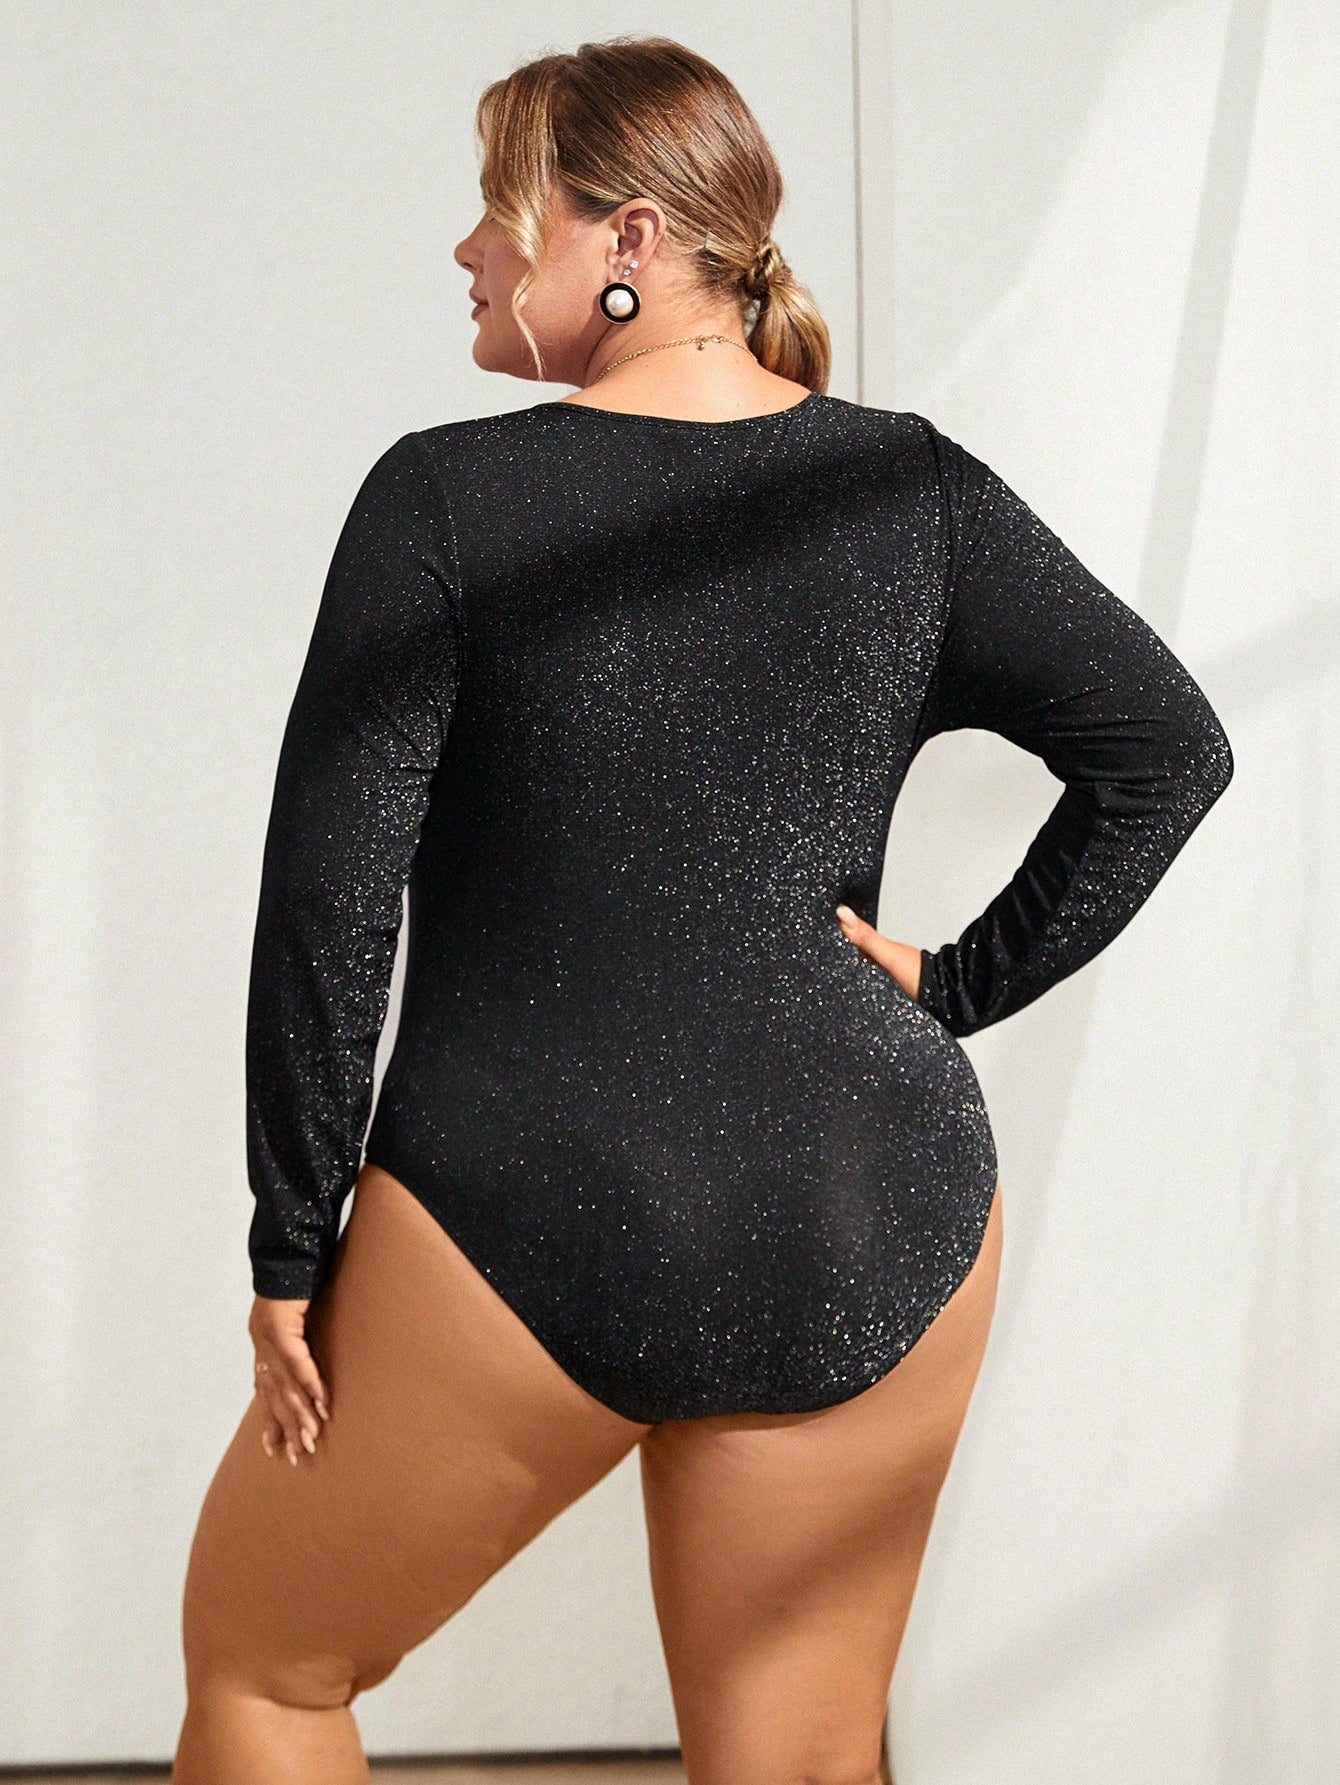 plus size model posing from behind wearing a Plus size glitter bodysuit